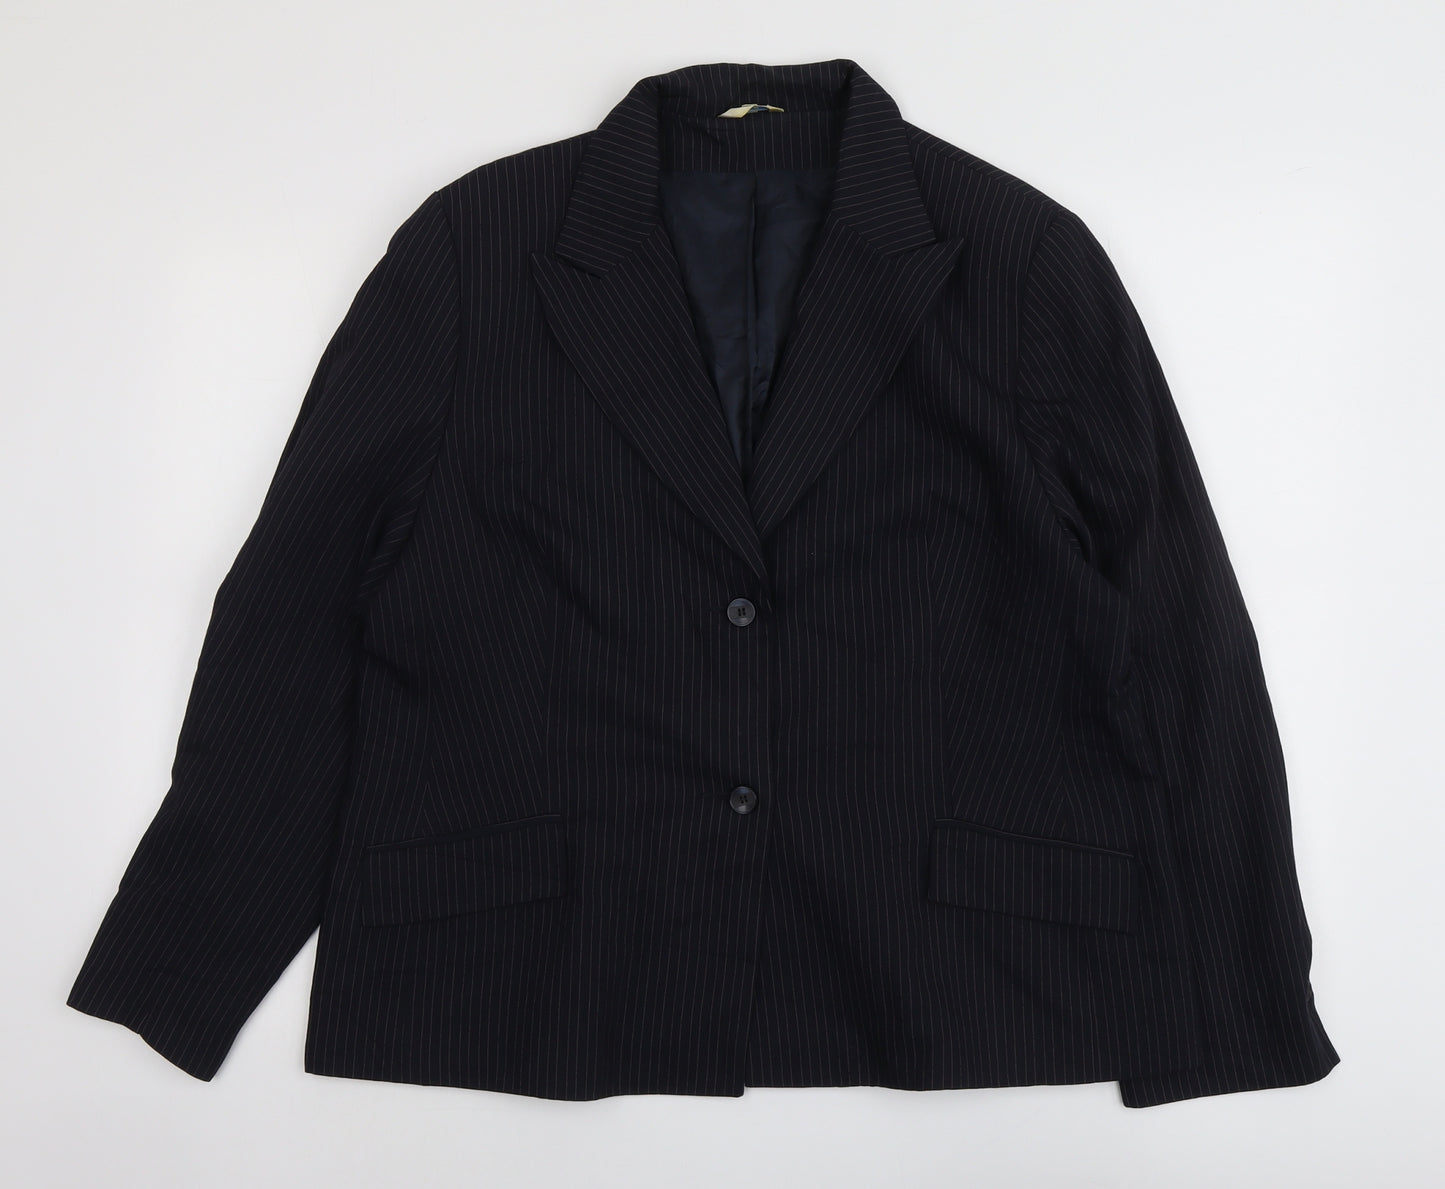 Klass Womens Black Pinstripe Polyester Jacket Suit Jacket Size 20